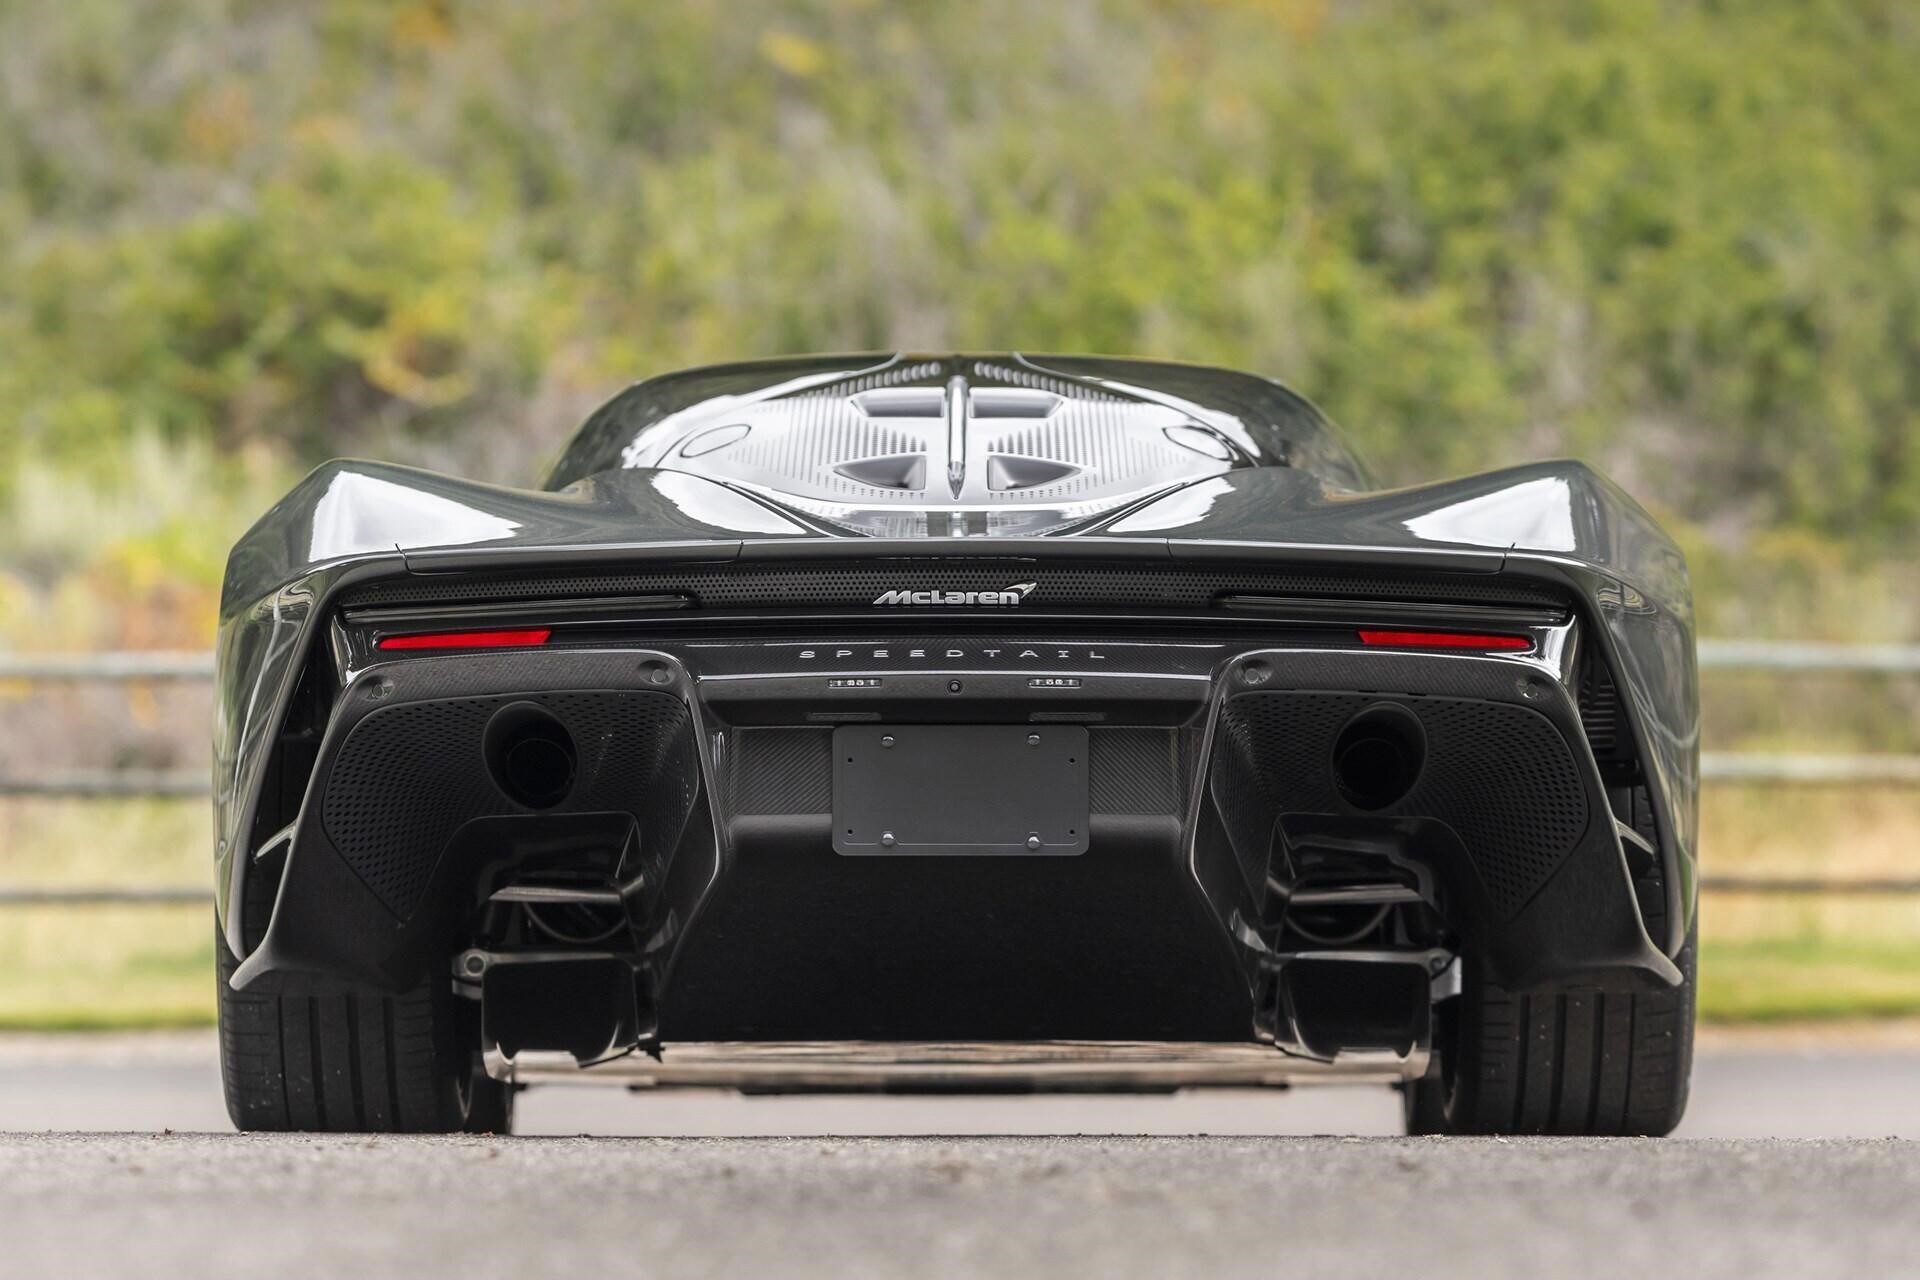 rear view of a 2020 Grey McLaren Speedtail.